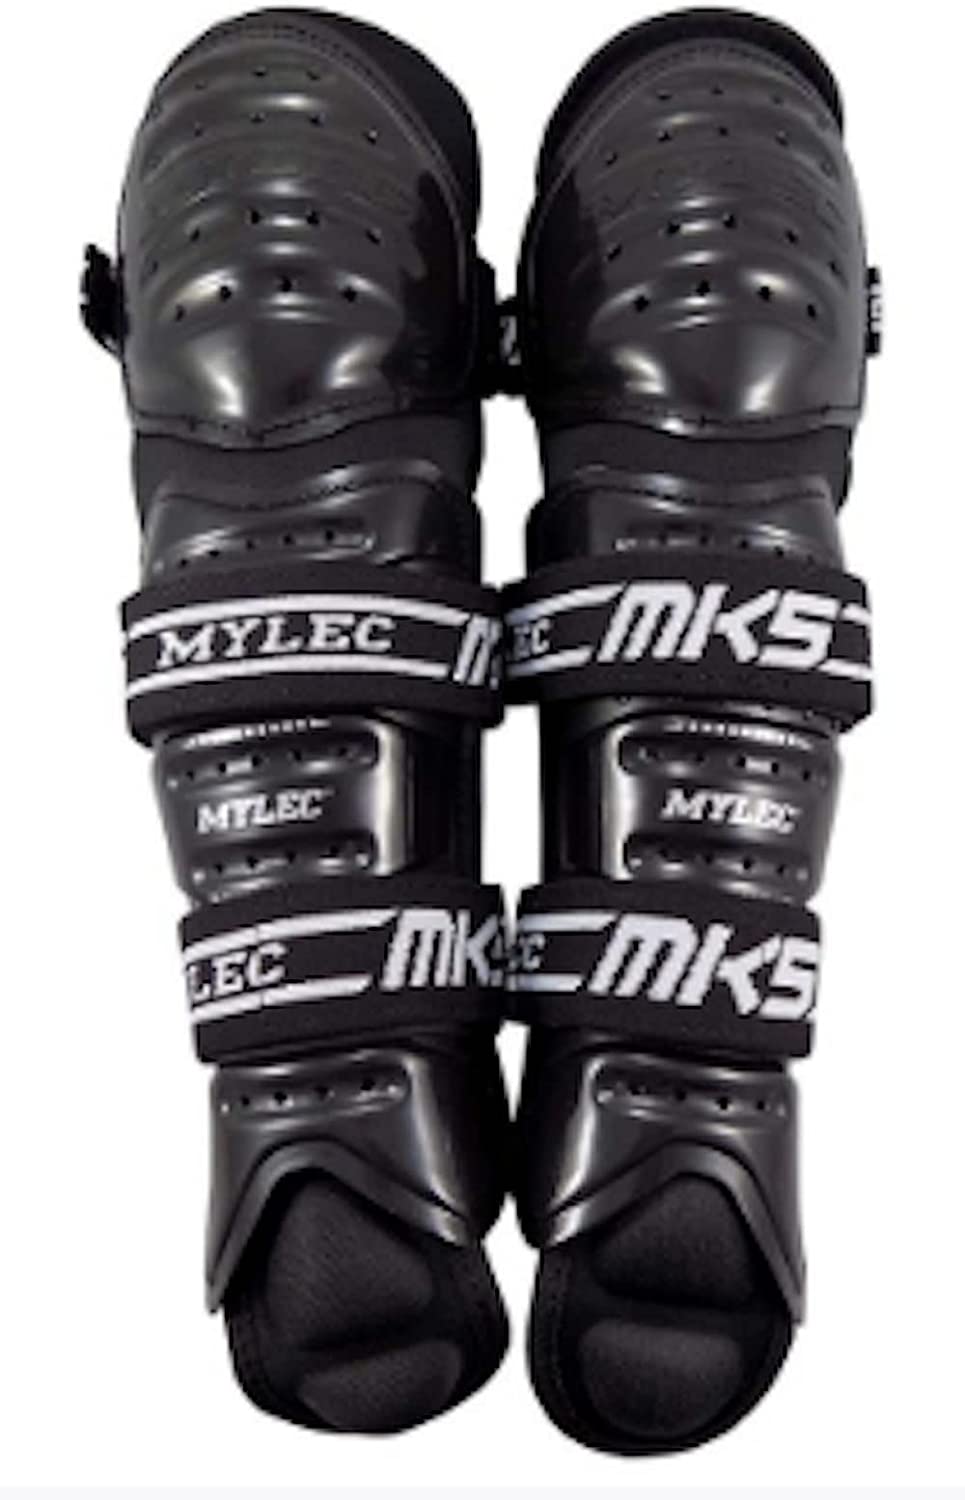 Mylec MK5 11" Pro Roller Hockey, Dek Hockey, Street Hockey Shinguards/Kneepads - Pro-Distributing